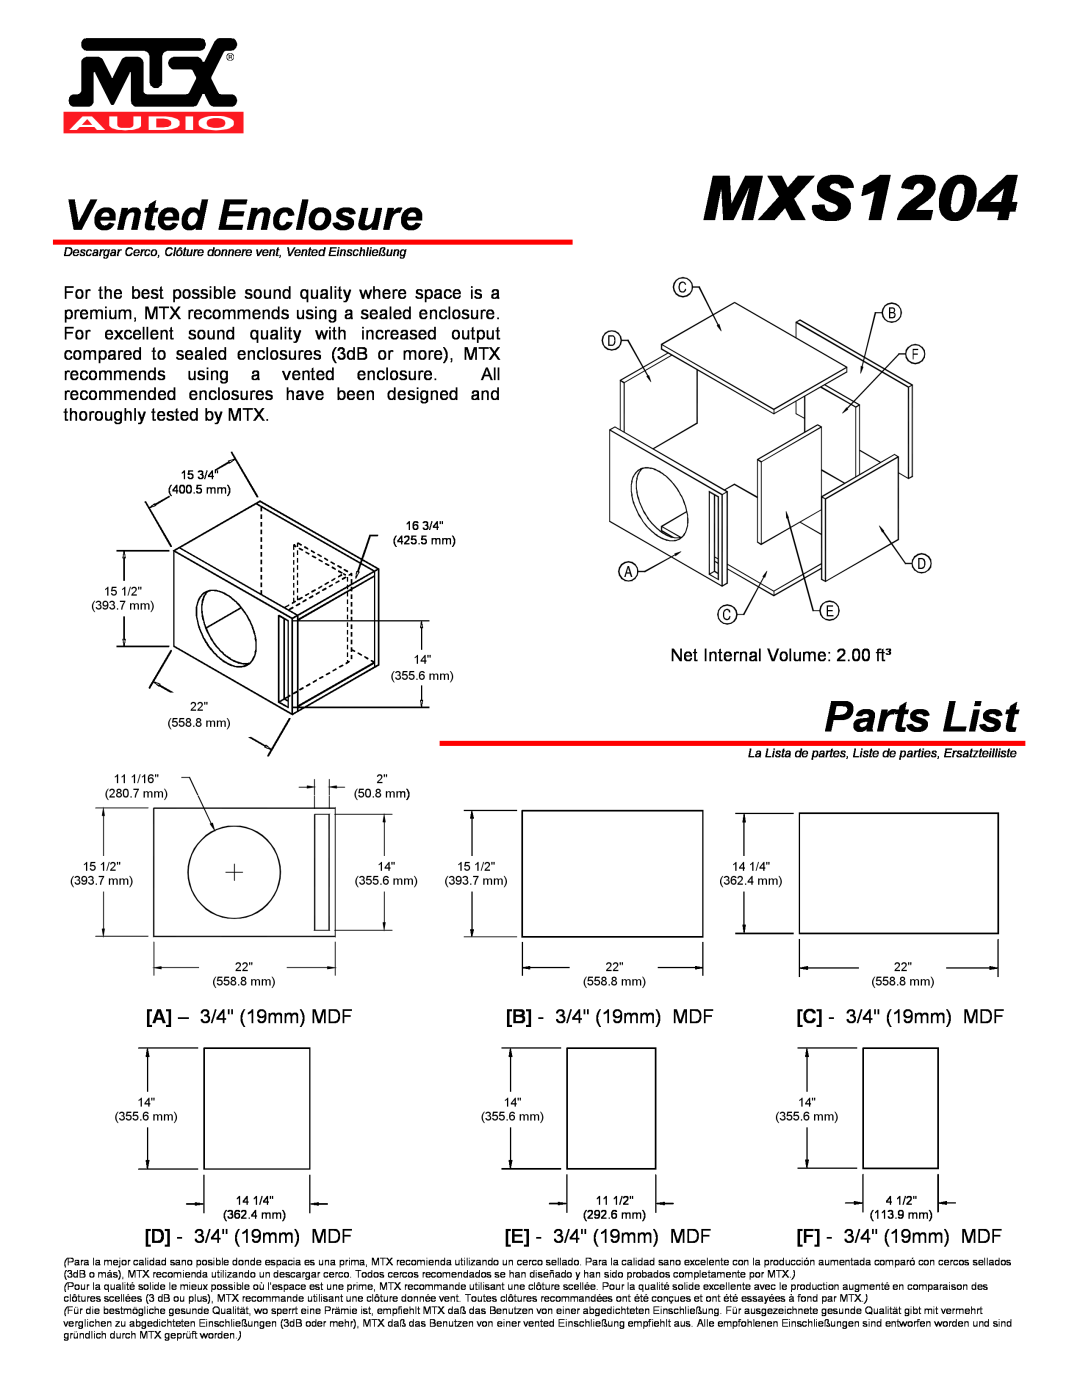 MTX Audio MXS1204 Vented Enclosure, E - 3/4 19mm MDF, F - 3/4 19mm MDF, Parts List, A - 3/4 19mm MDF, B - 3/4 19mm MDF 